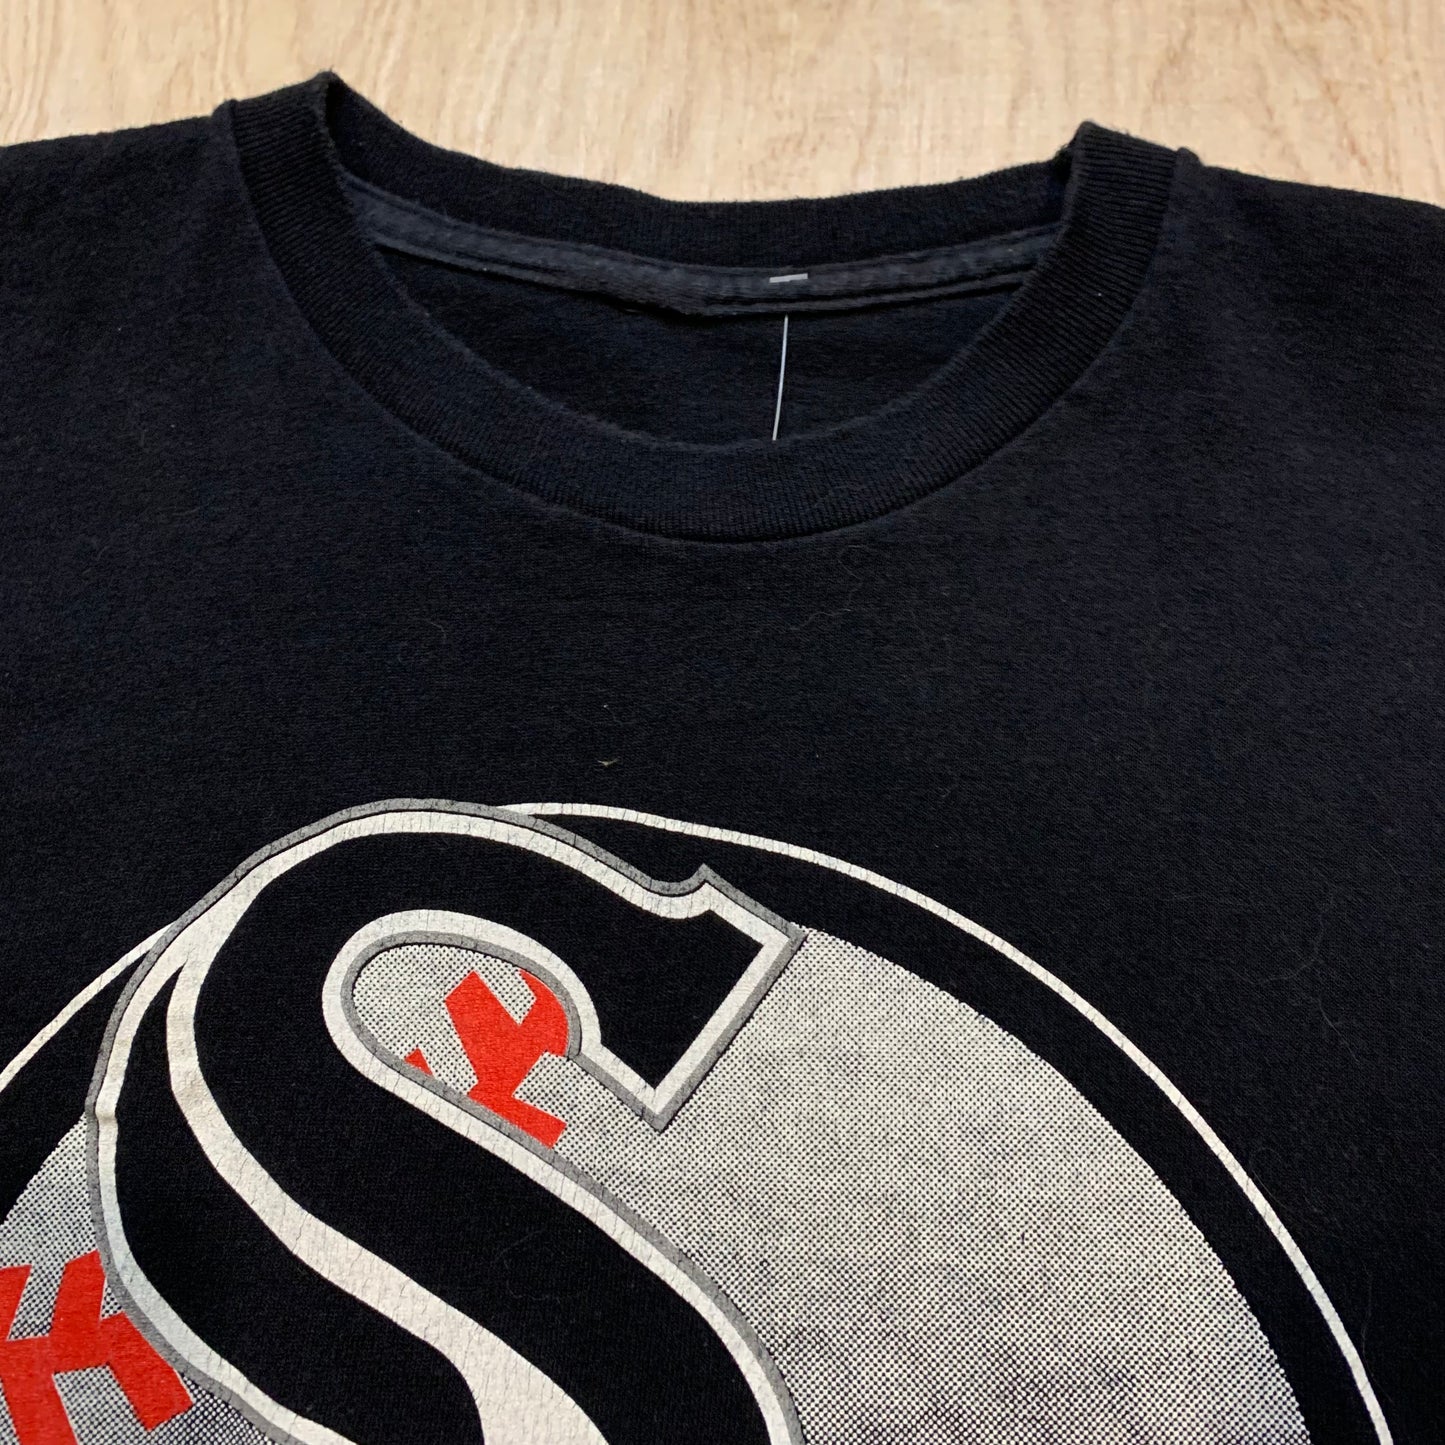 1993 Chicago White Sox Single Stitch T-Shirt